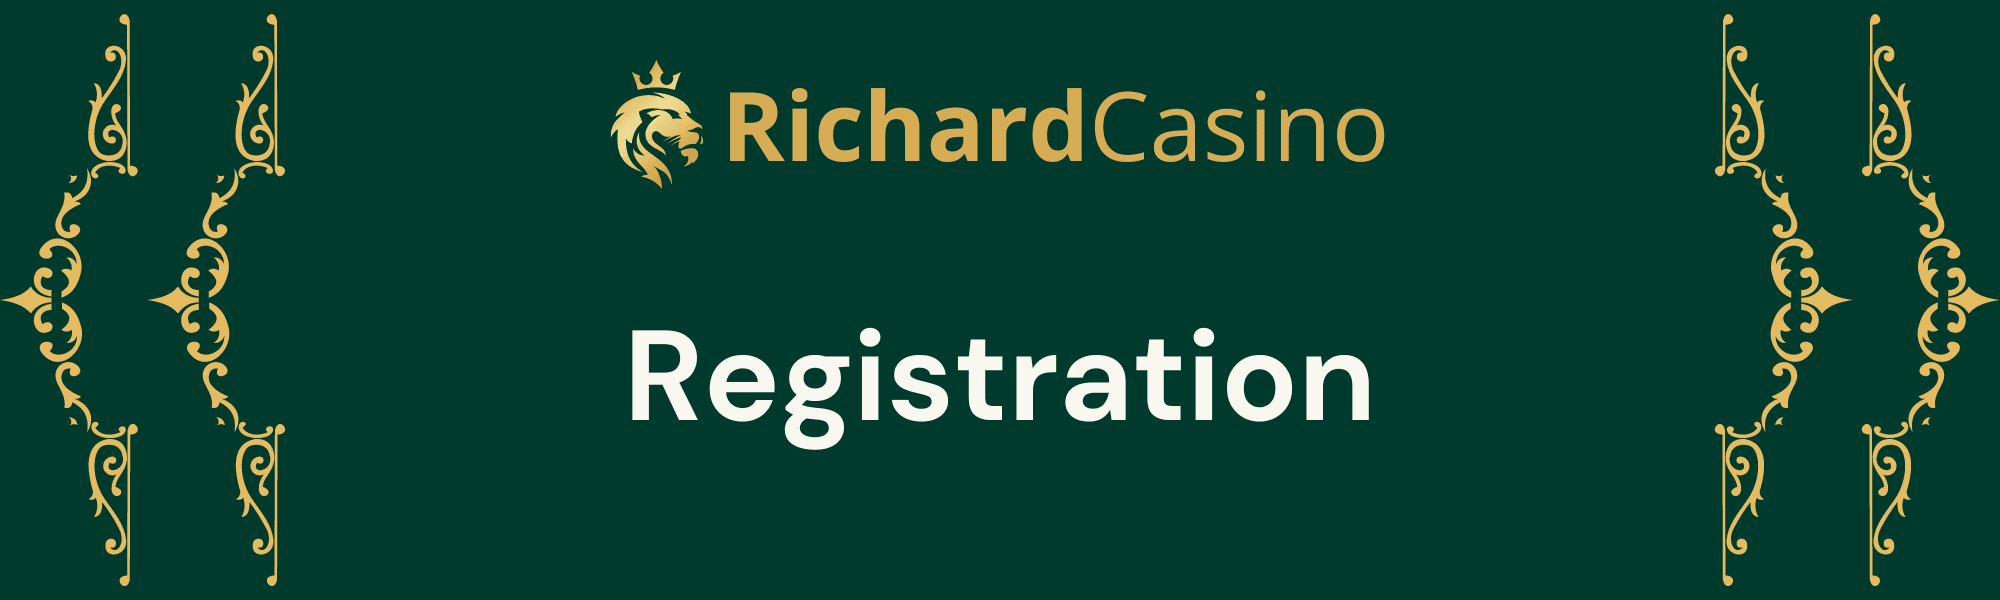 Richard Casino Registration.png